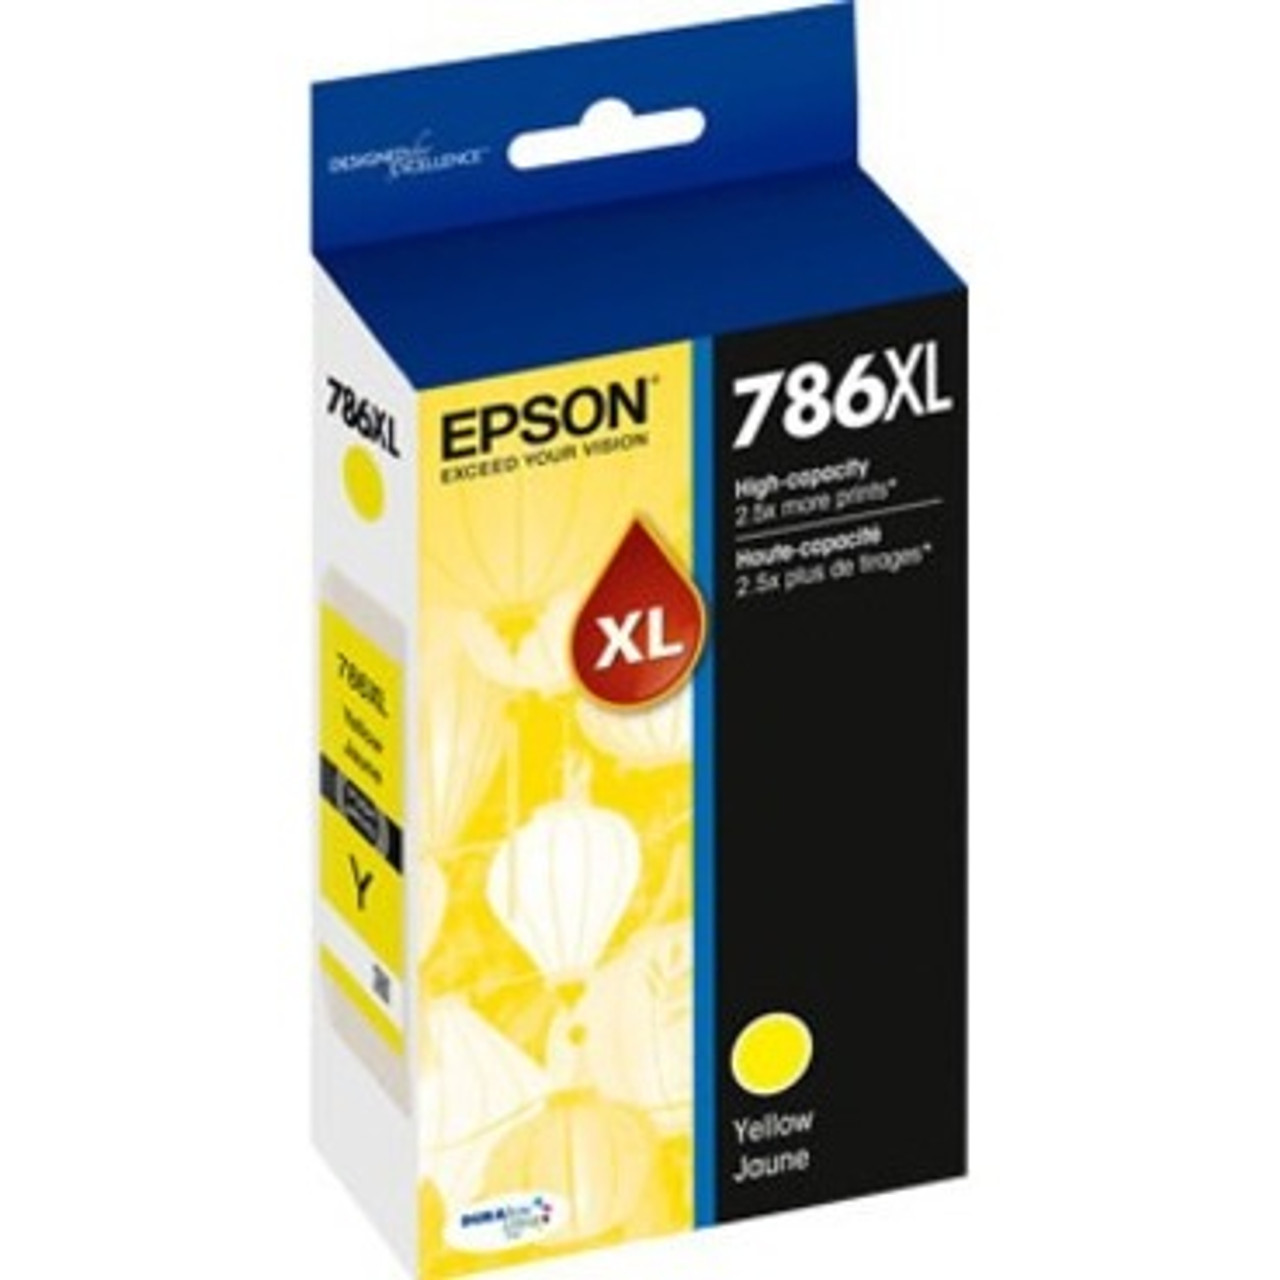 Epson DURABrite Ultra 786XL Original Ink Cartridge - Yellow - T786XL420-S